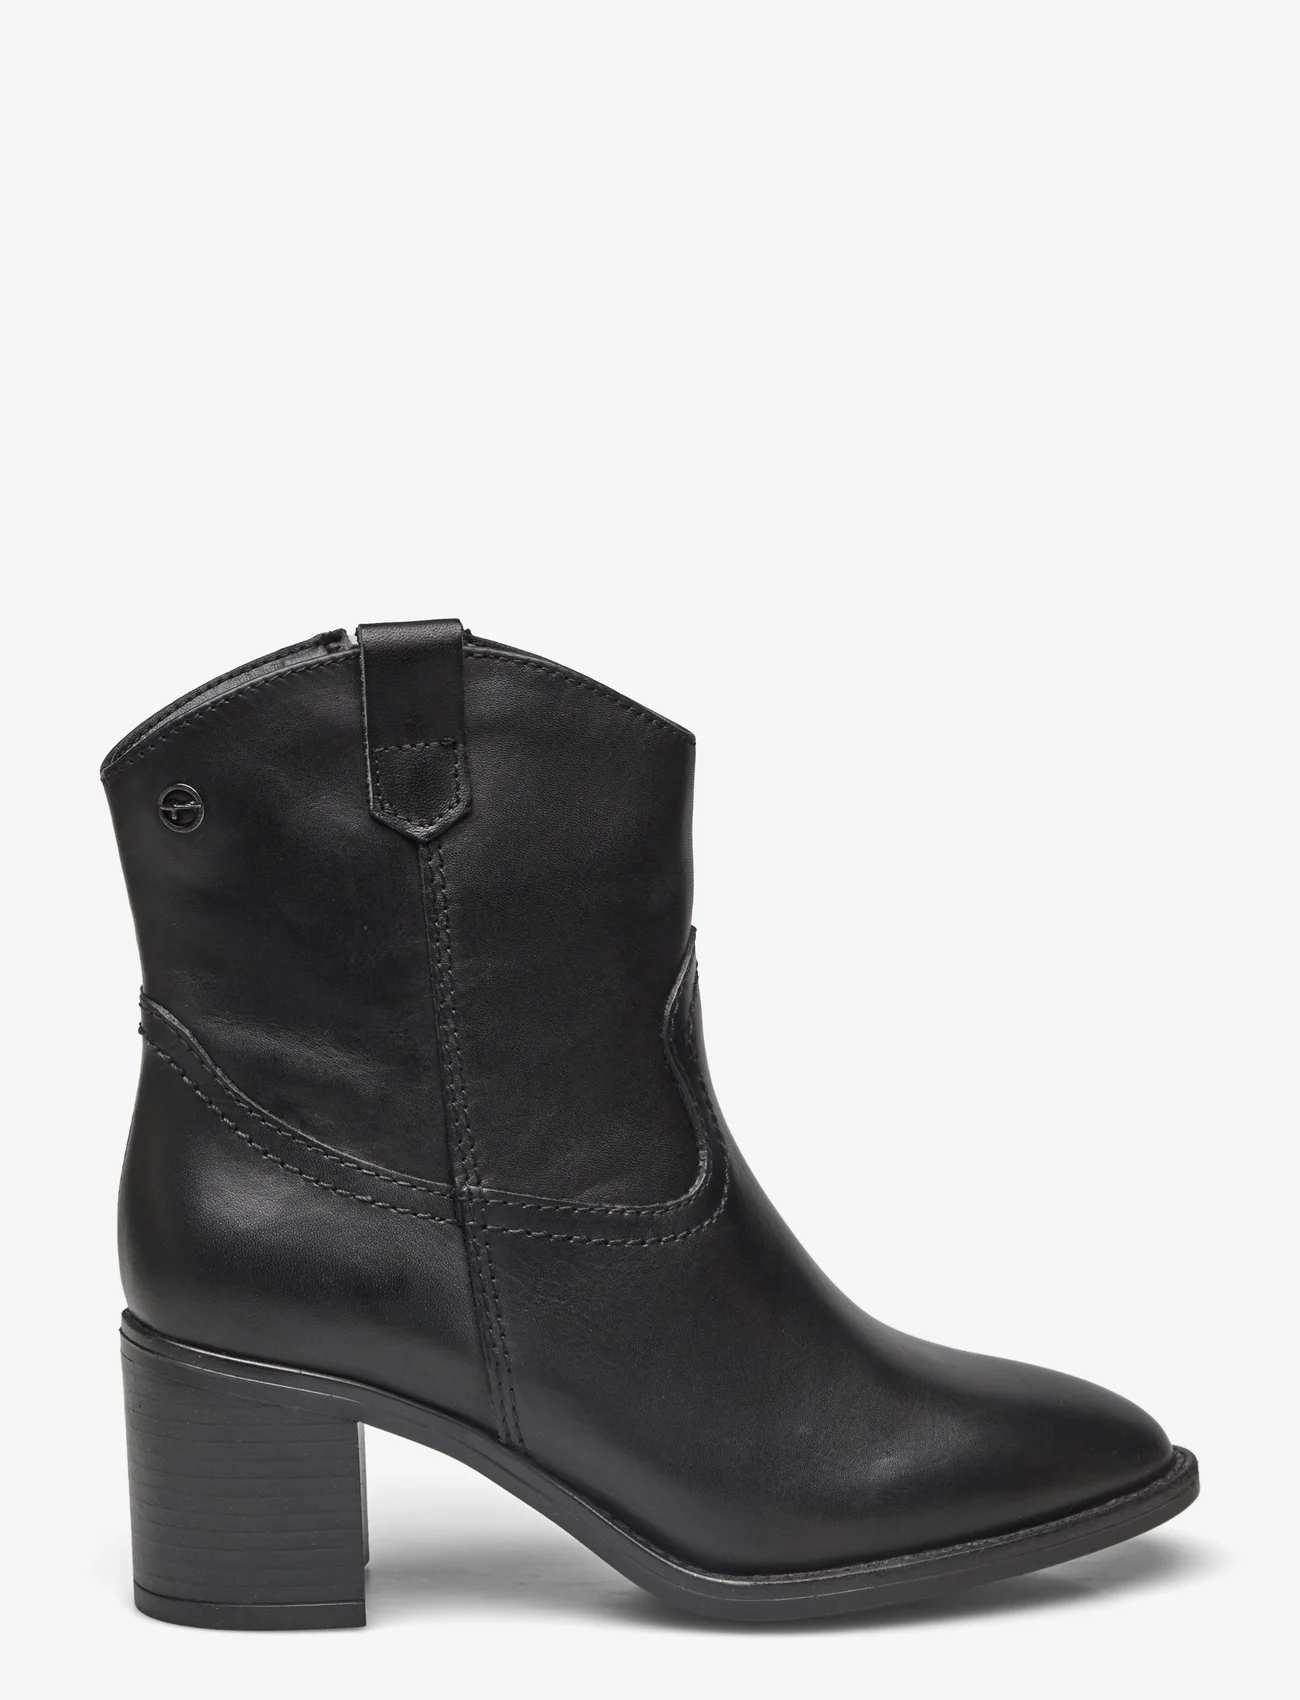 Tamaris - Women Boots - korolliset nilkkurit - black leather - 1